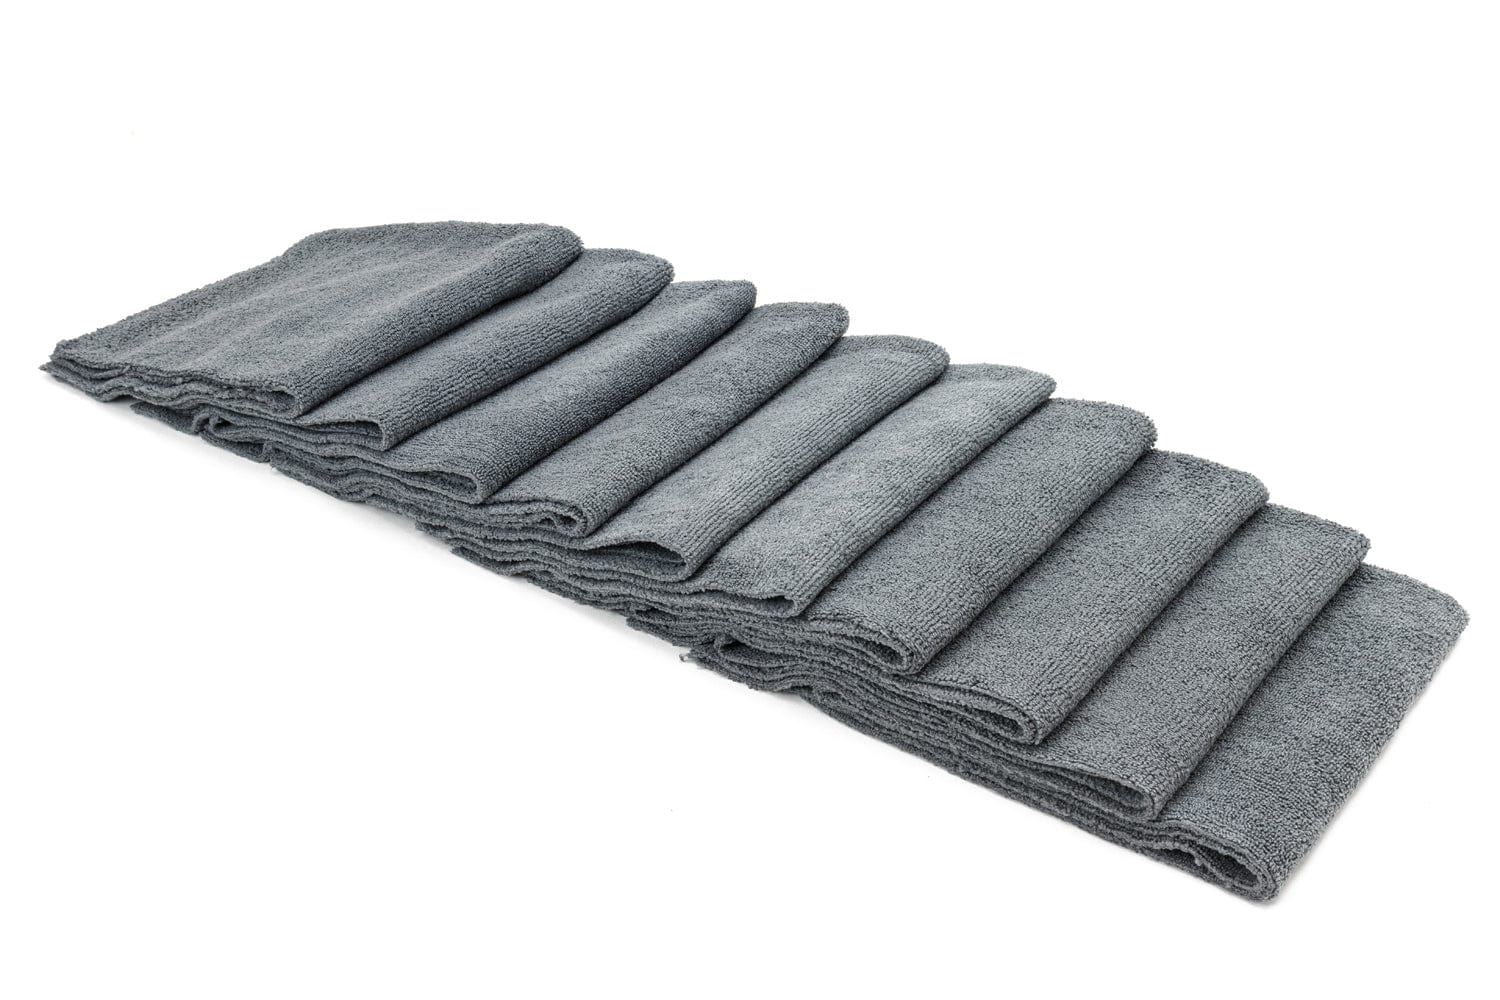 Autofiber Gray / Edgeless [Utility 300] All-Purpose Edgeless Microfiber Towel (16 in x 16 in., 300 gsm) 10pack